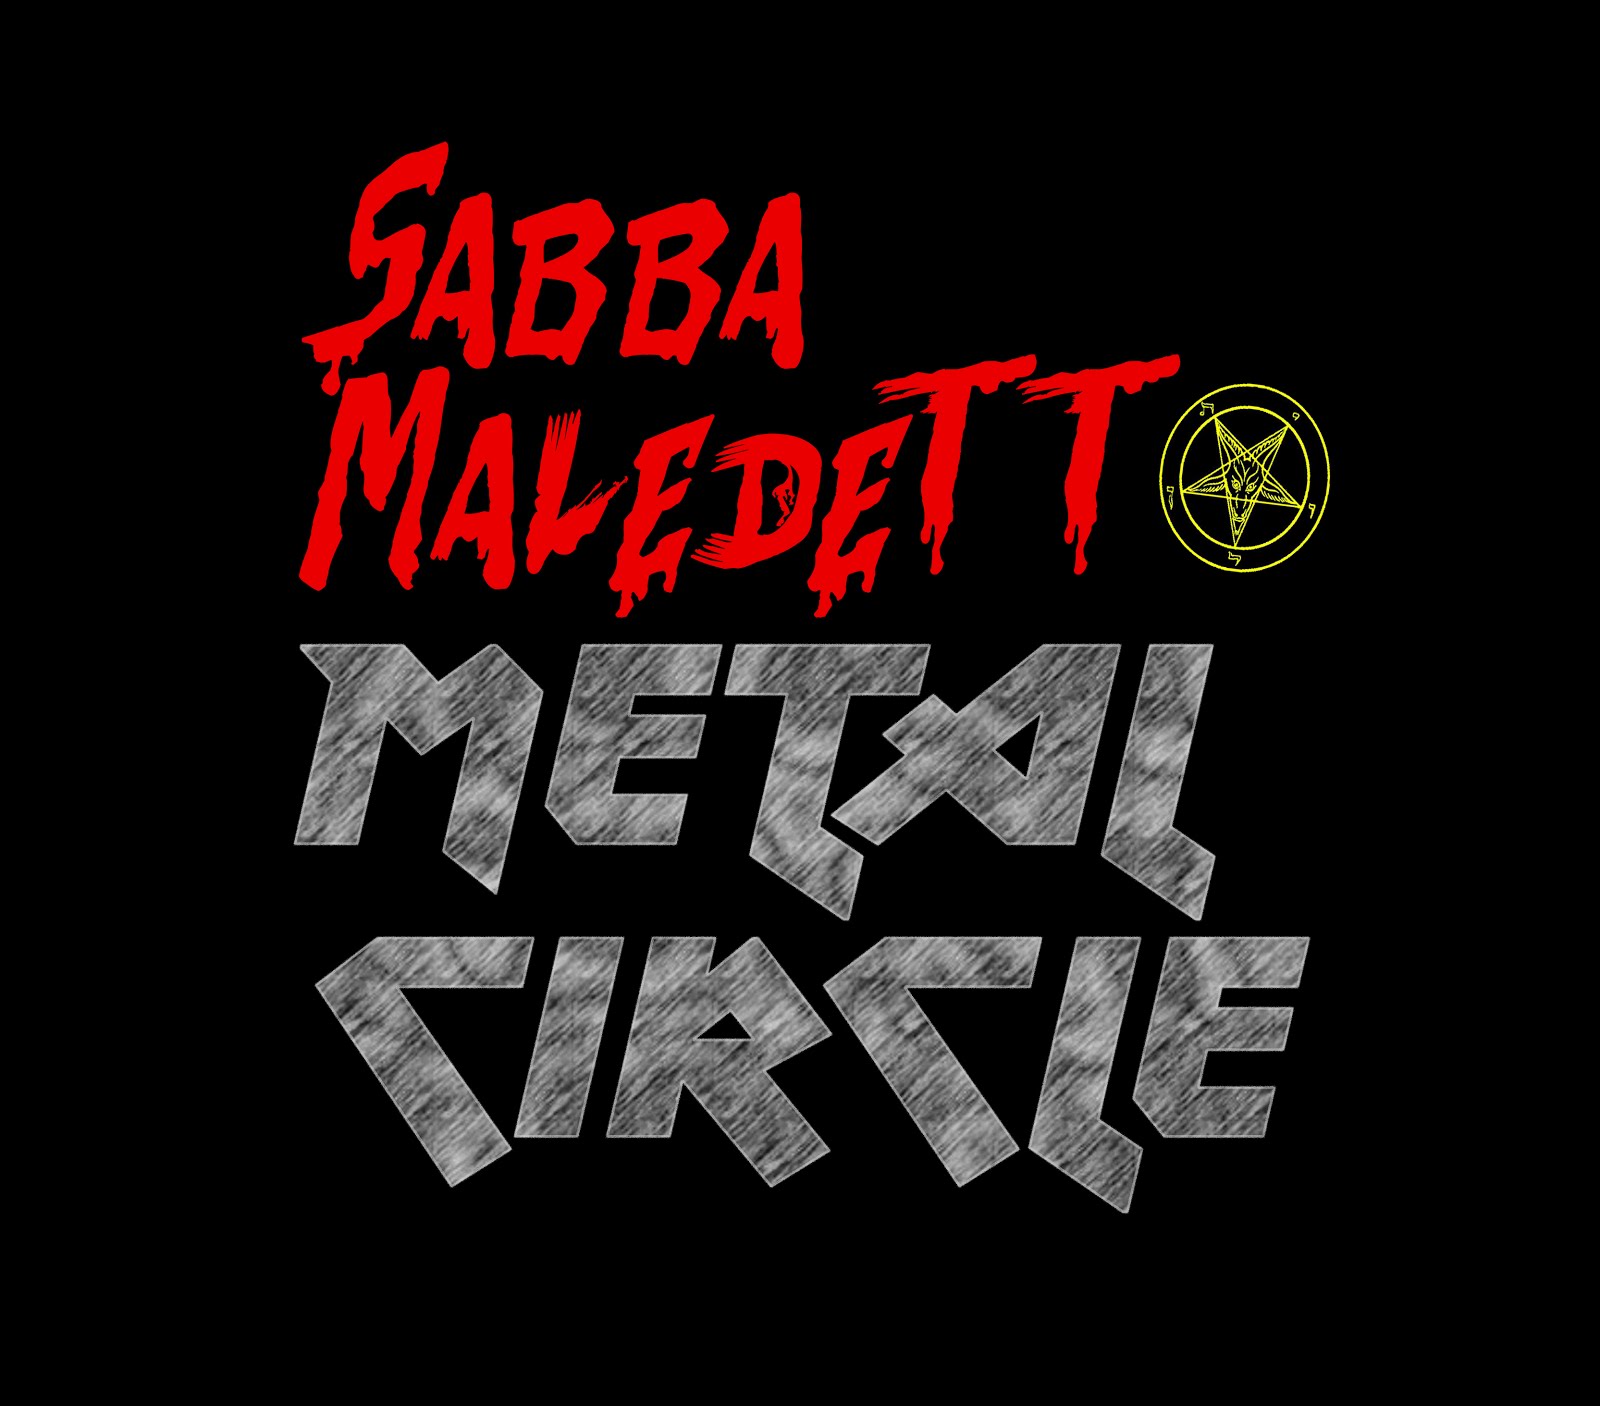 SABBA MALEDETTO METAL CIRCLE